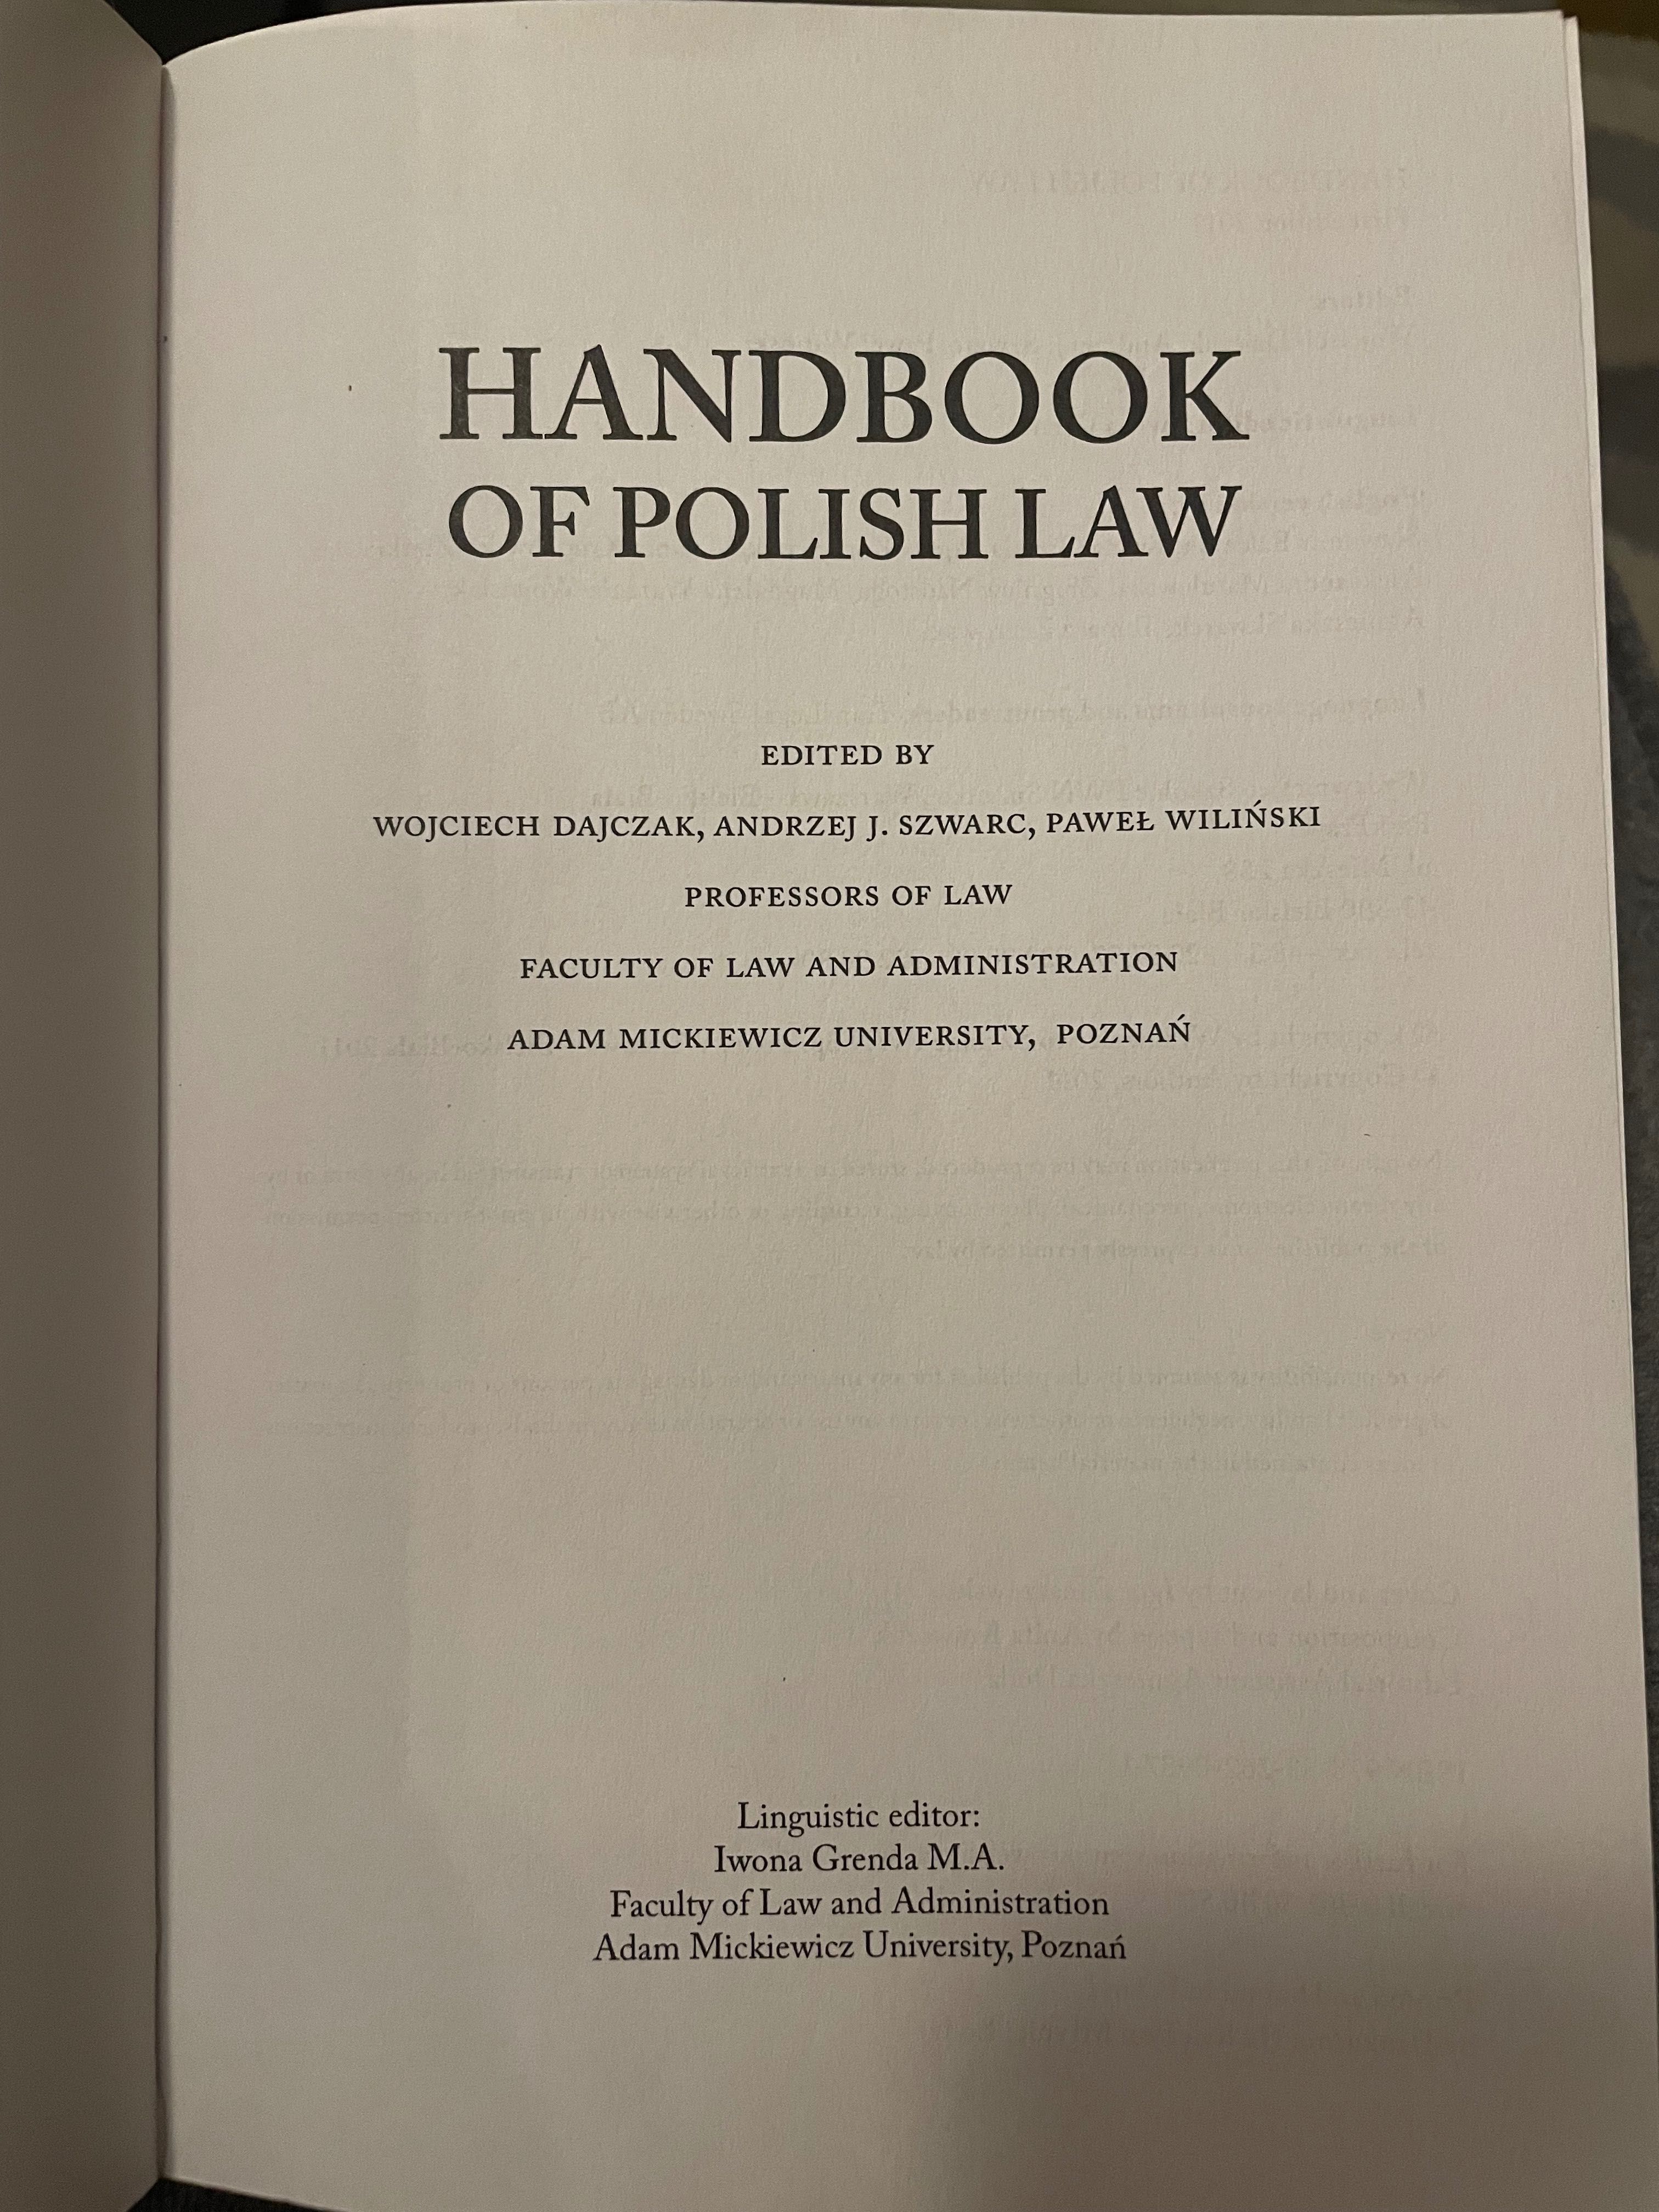 Handbook of polish law, Dajczak, Szwarc